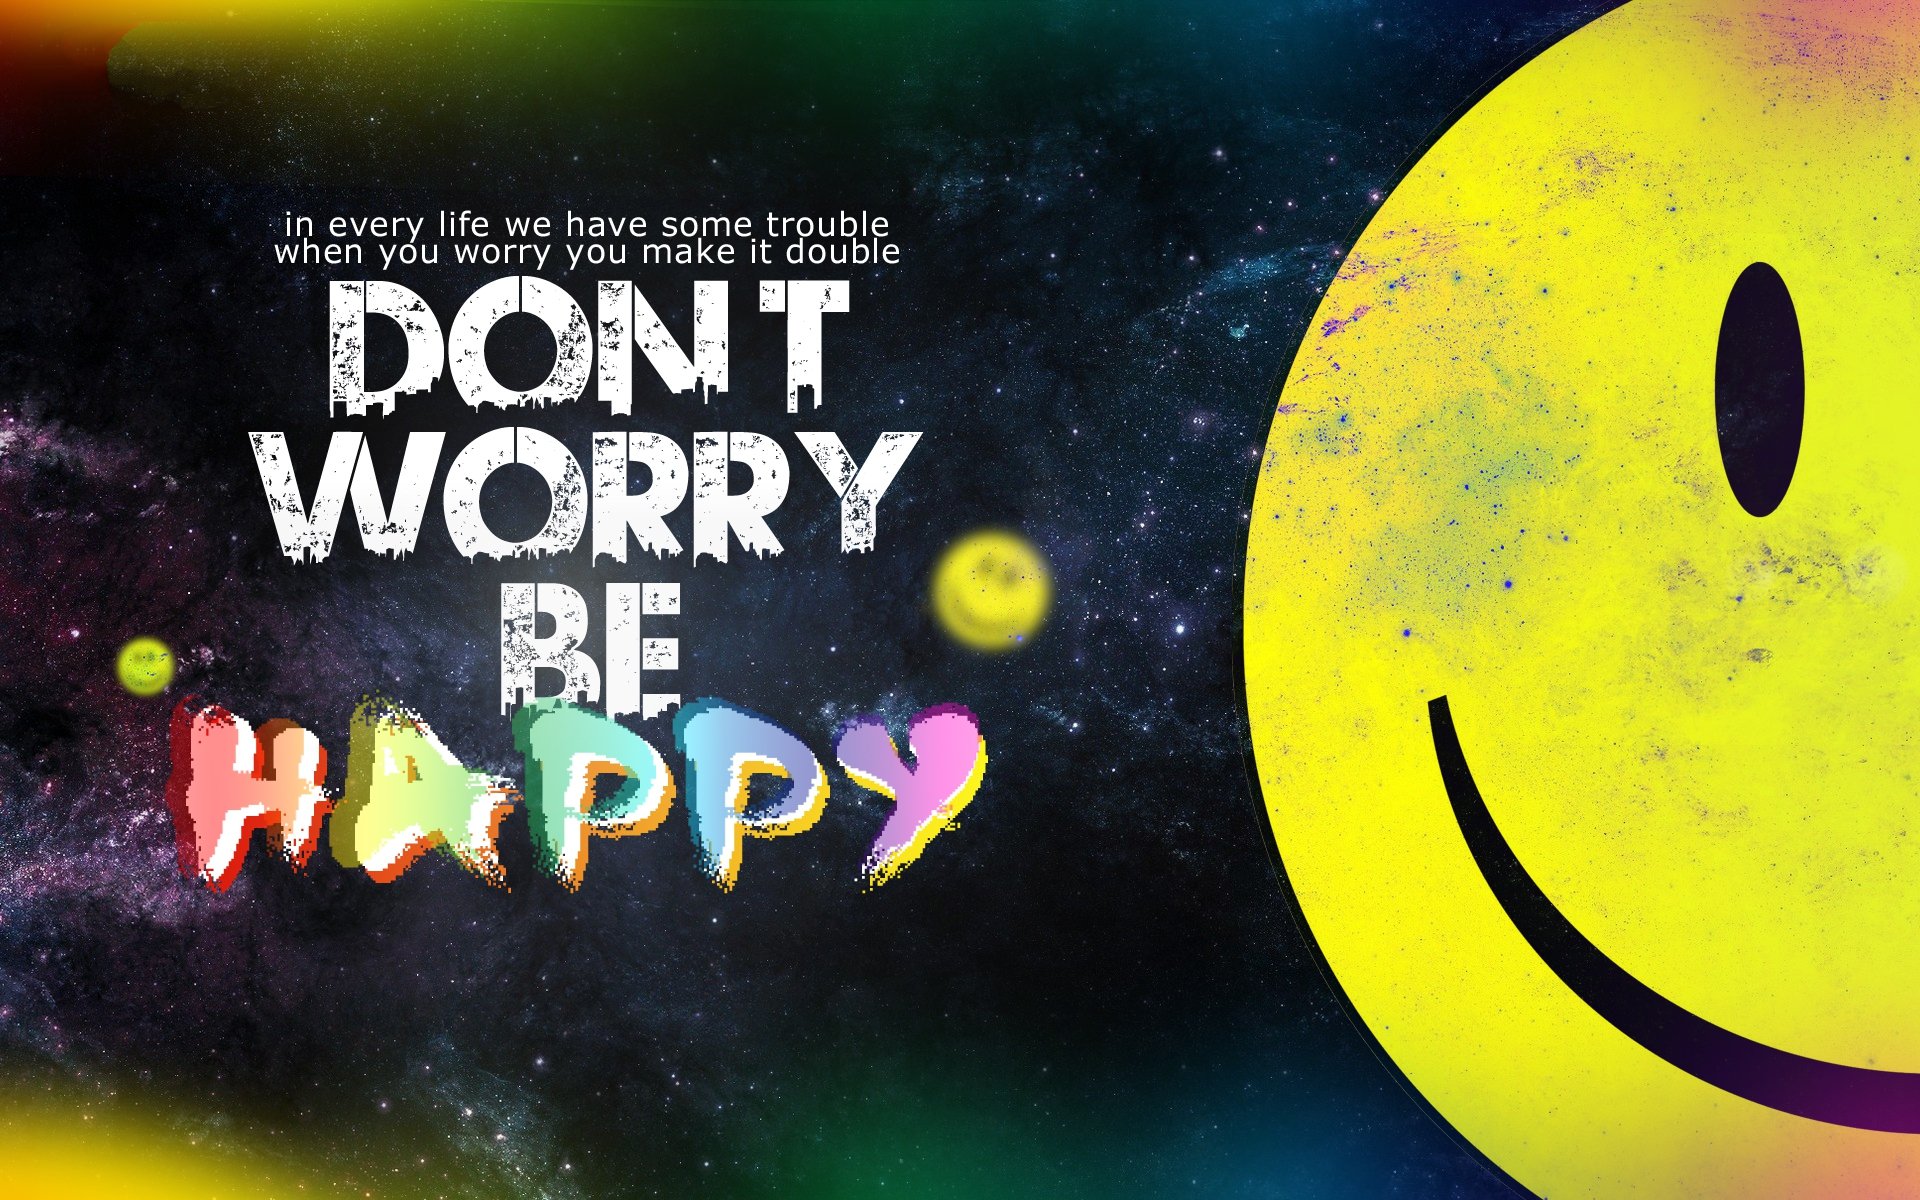 Be happy на русском языке. Don't worry be Happy. Донт вори би Хэппи. Надпись don't worry be Happy. Надпись донт вори би Хэппи.